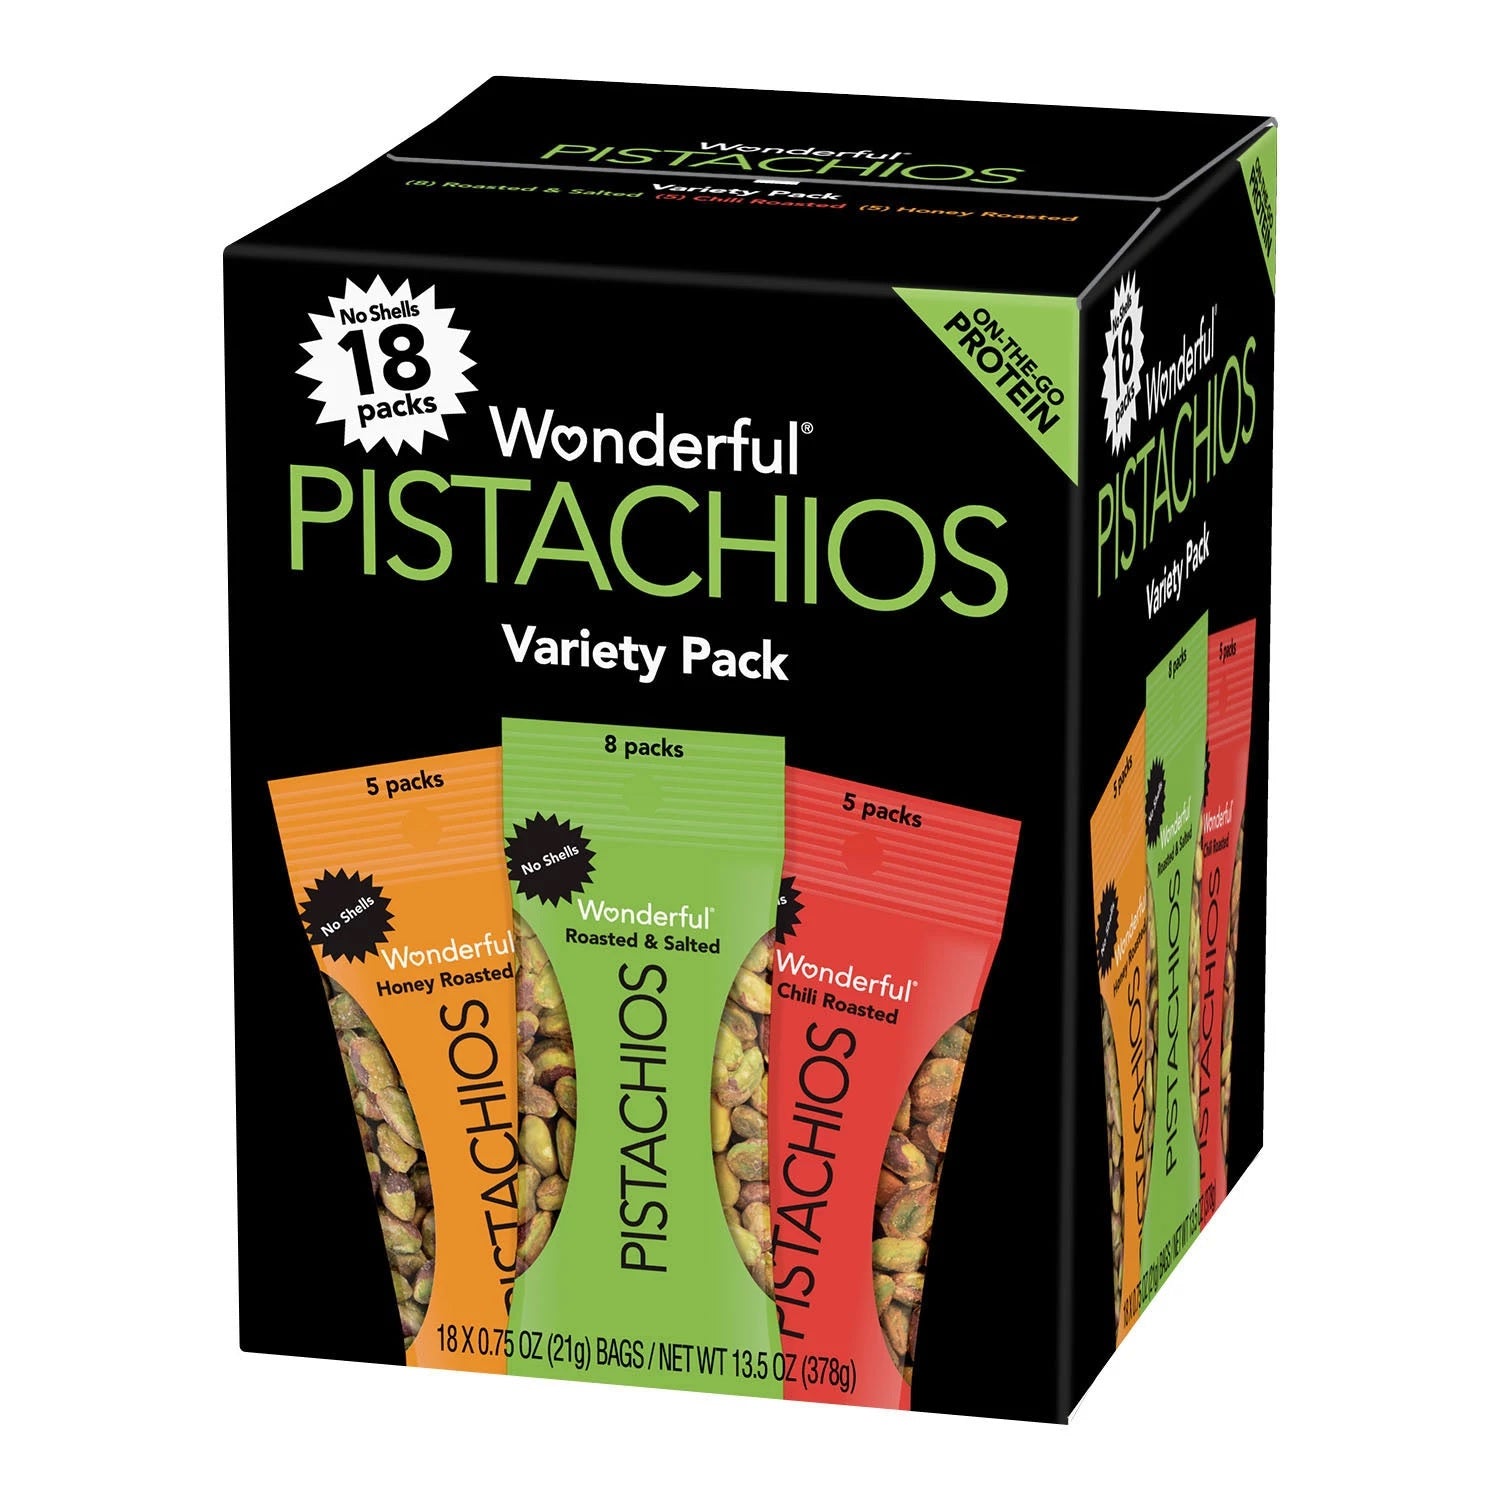 Wonderful Pistachios No Shells Variety Pack - 0.75oz/18pk